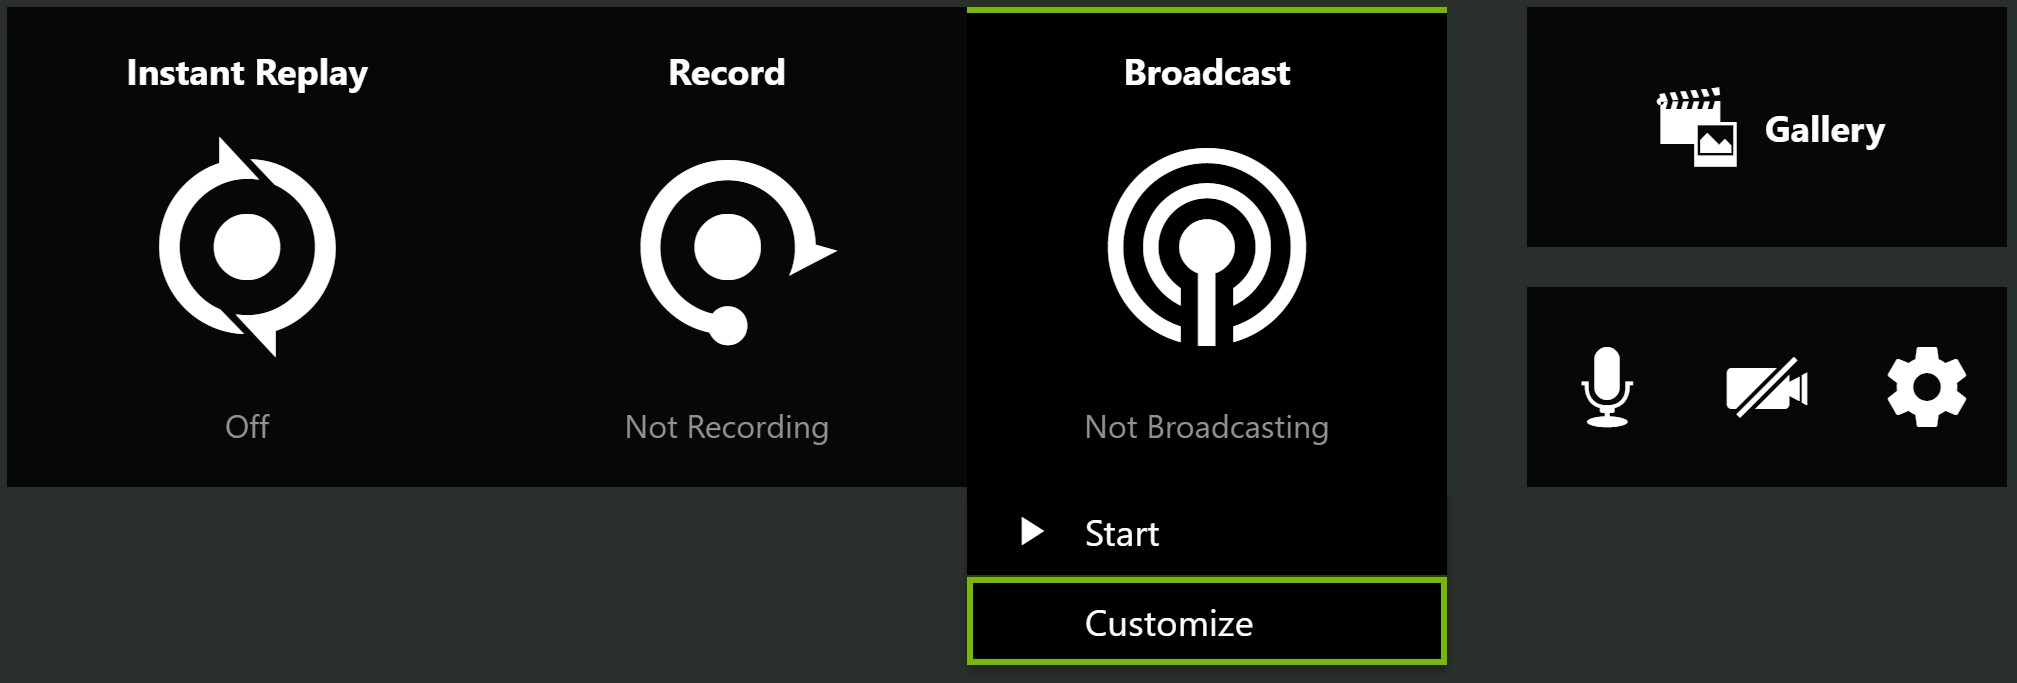 nvidia broadcast overlays